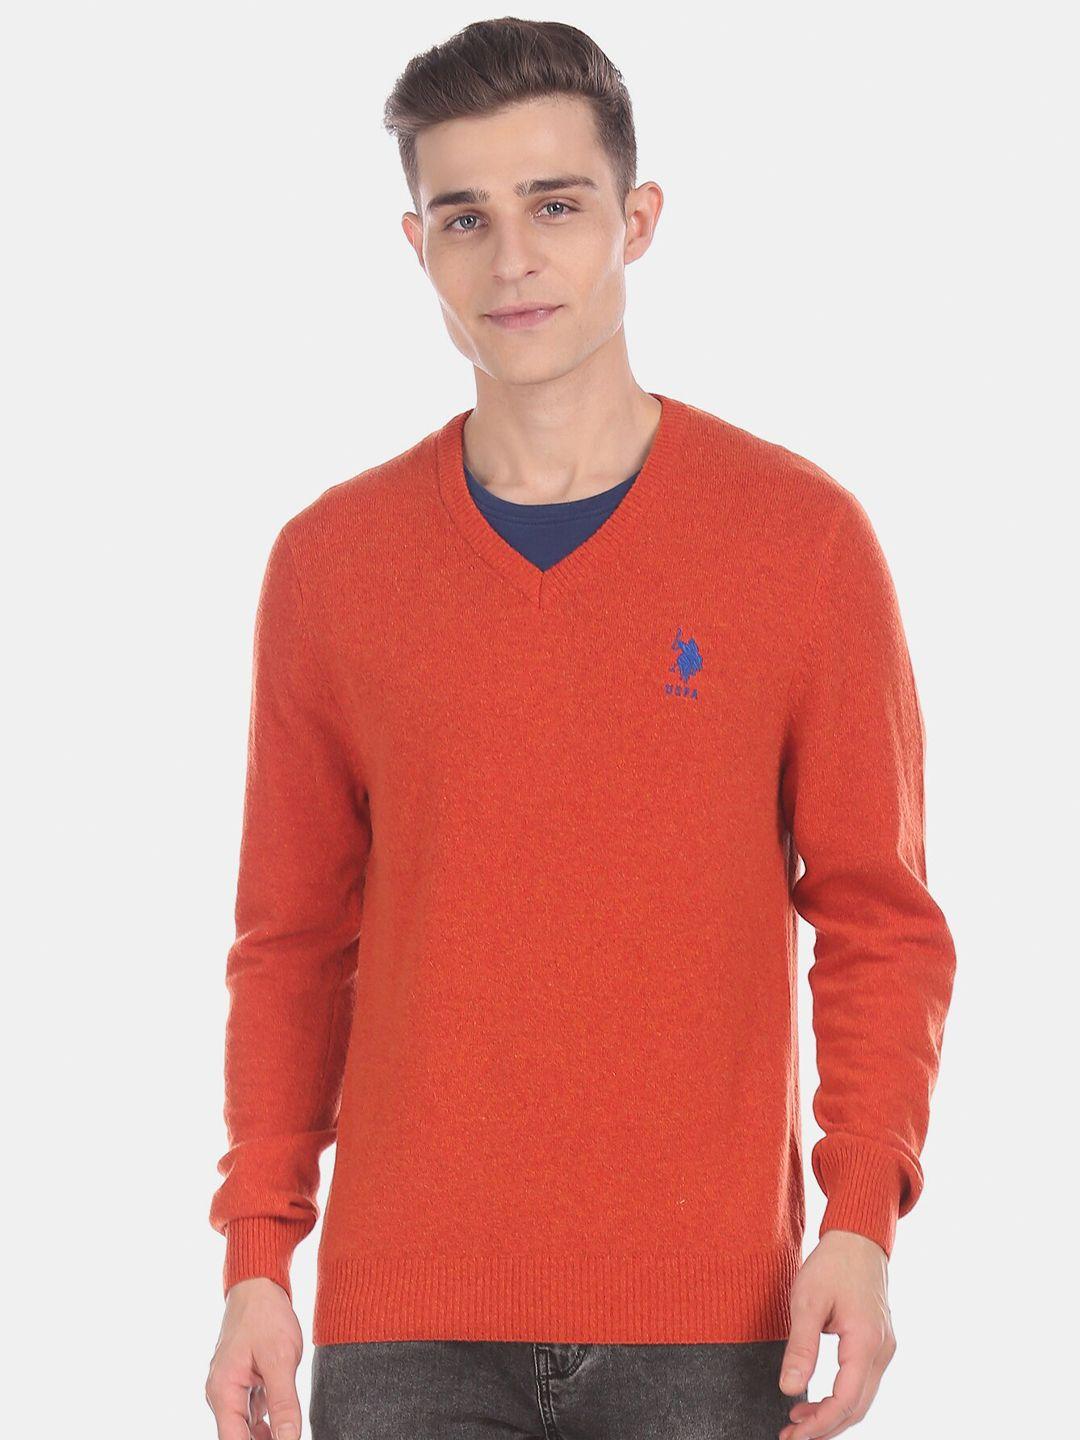 u-s-polo-assn-men-orange-pullover-sweater